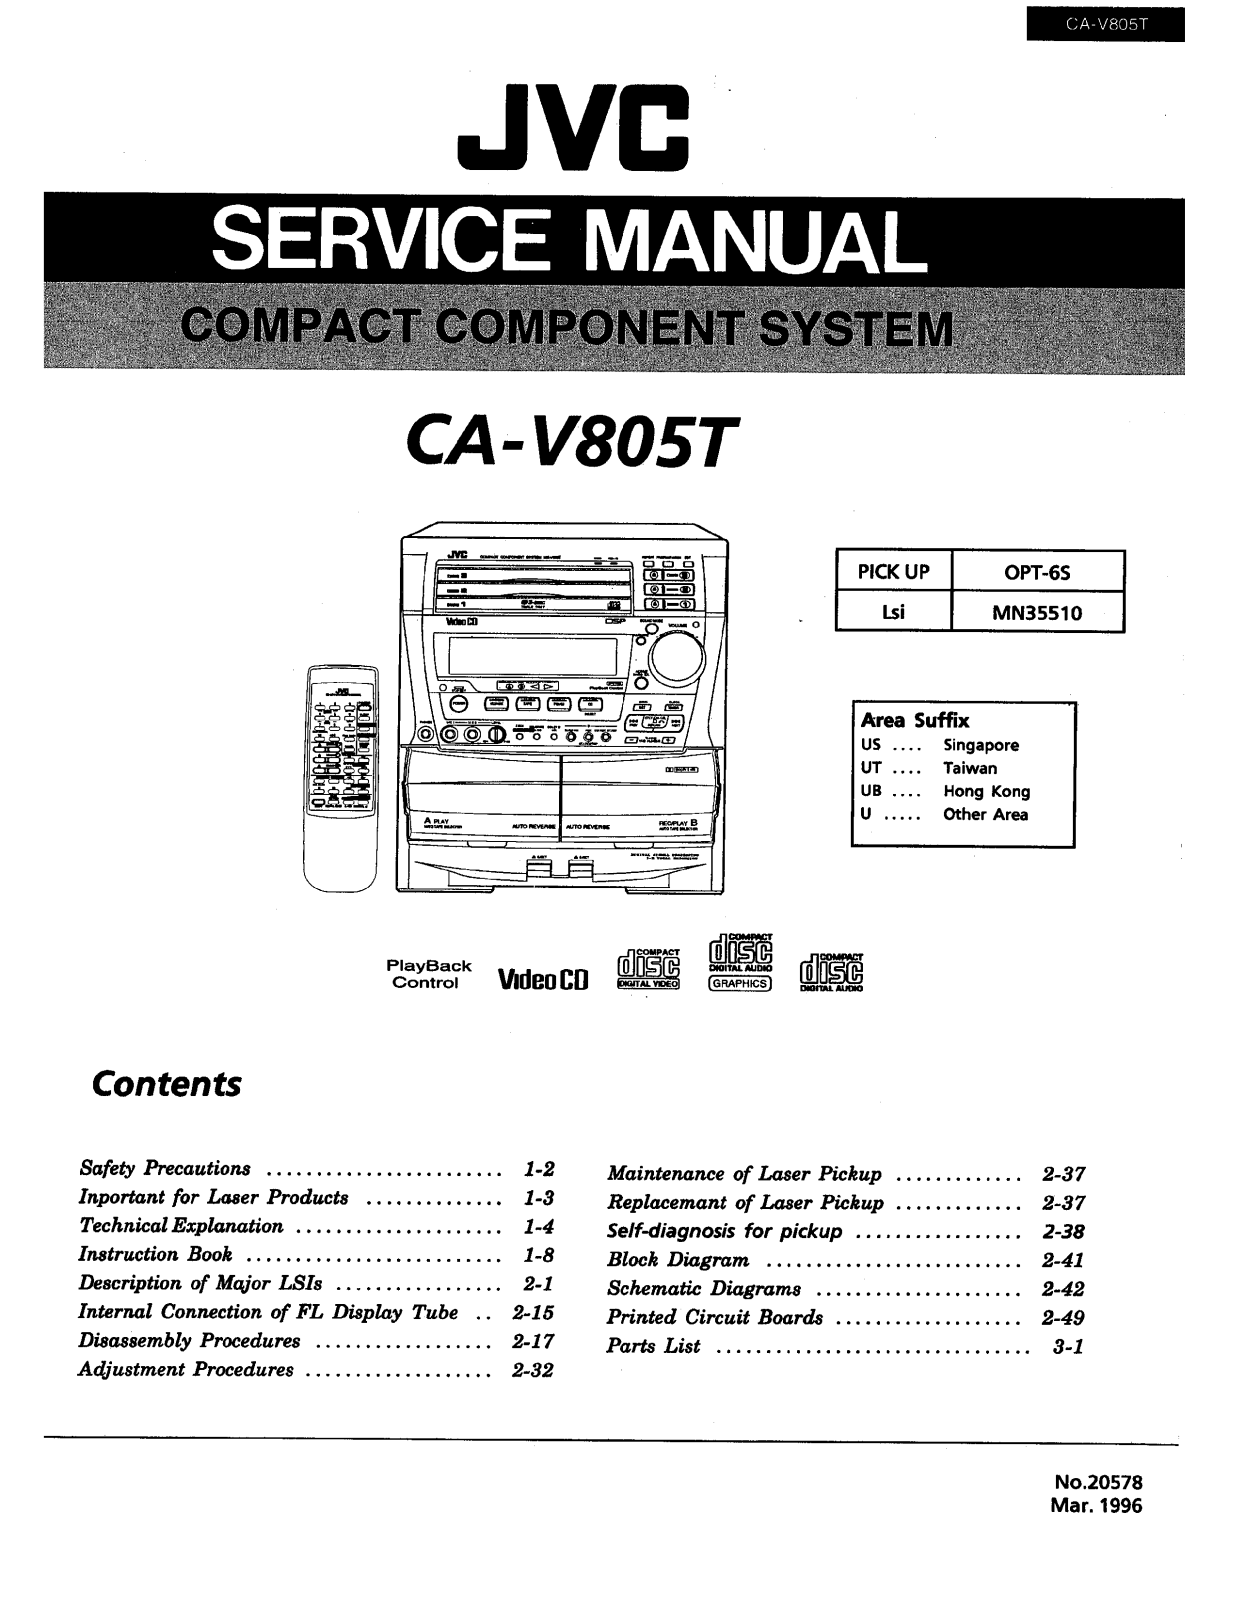 Jvc CA-V805-T Service Manual